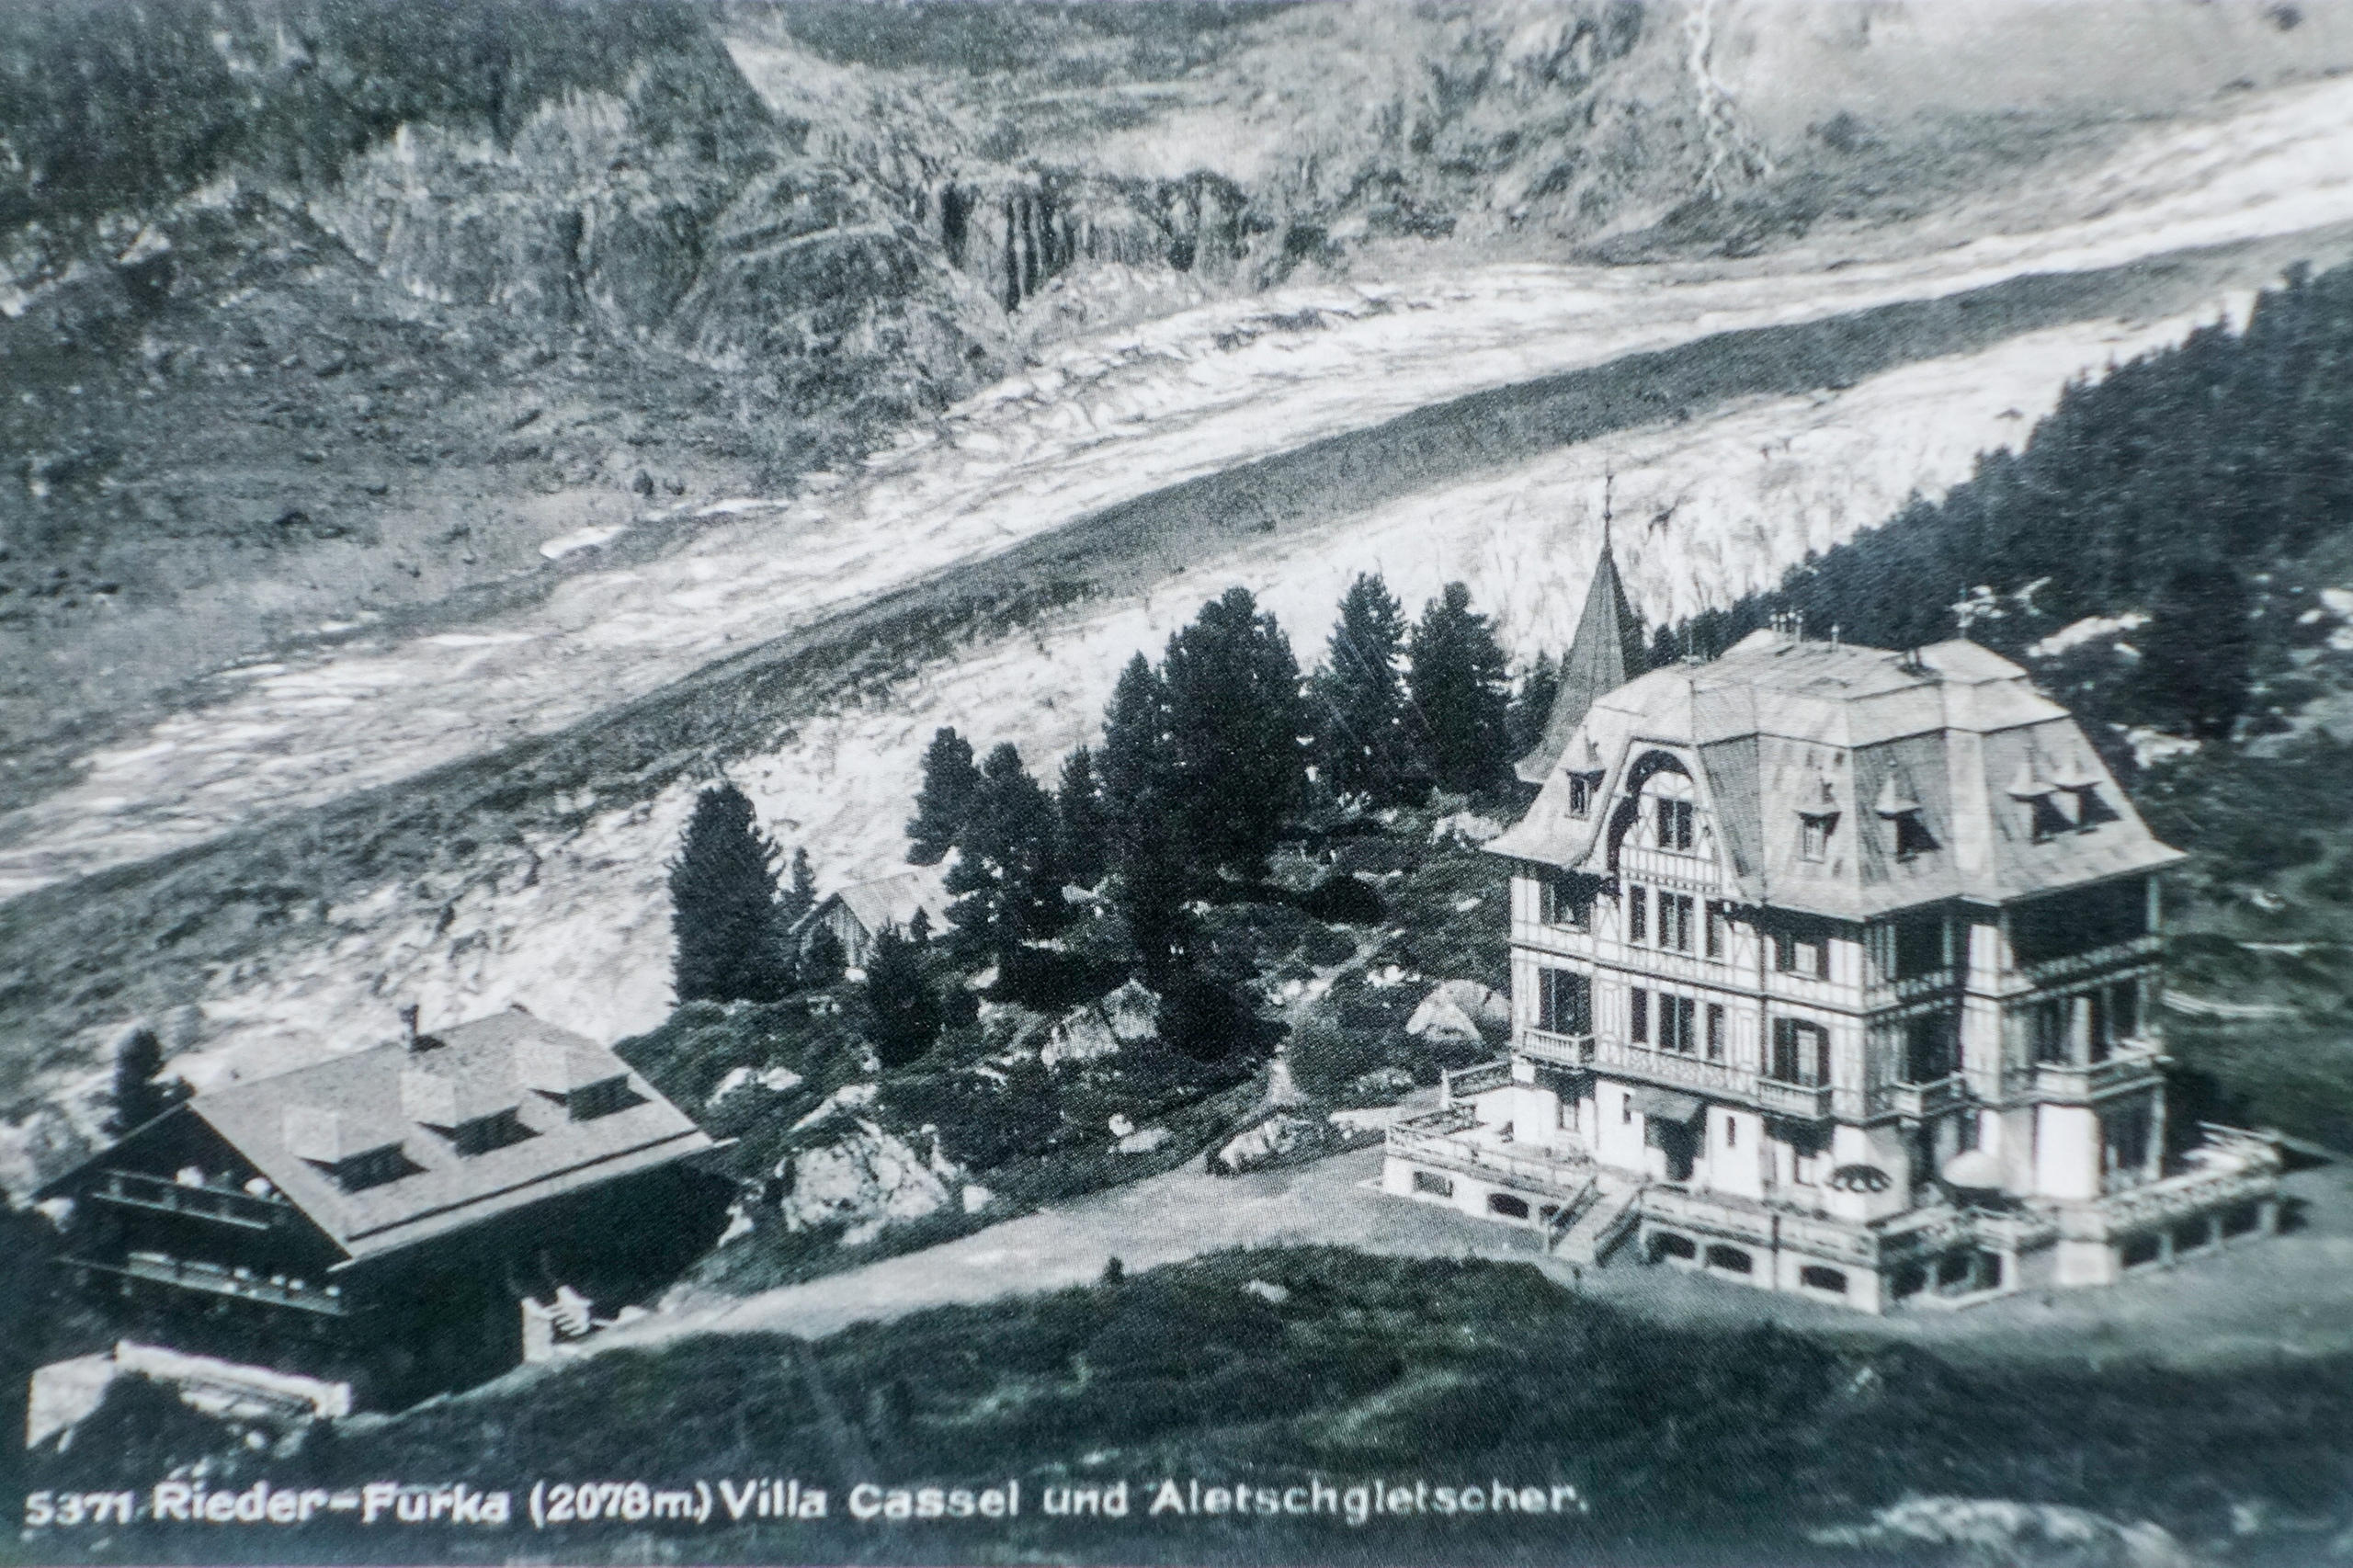 La Villa Cassel